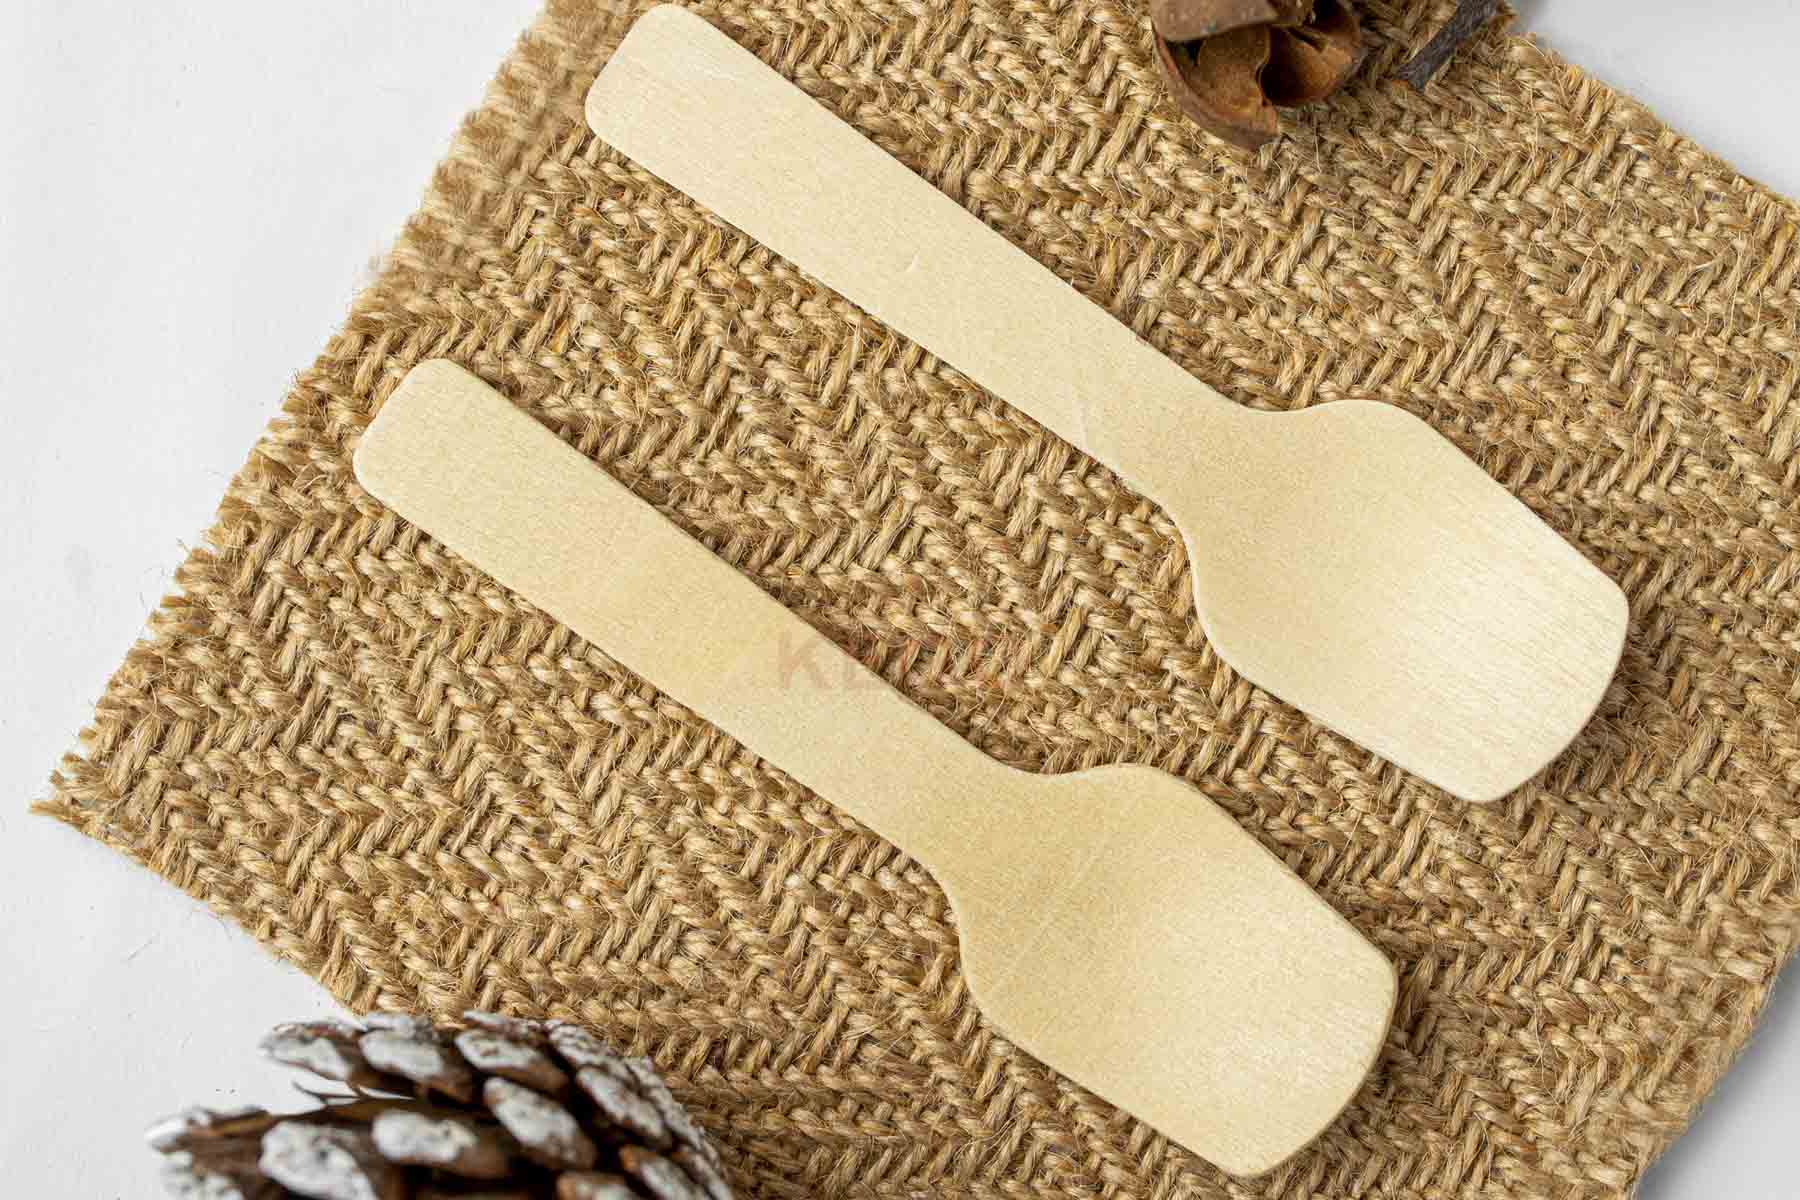 https://kego.com.vn/wp-content/uploads/2015/09/disposable-wooden-spoon-2.jpg